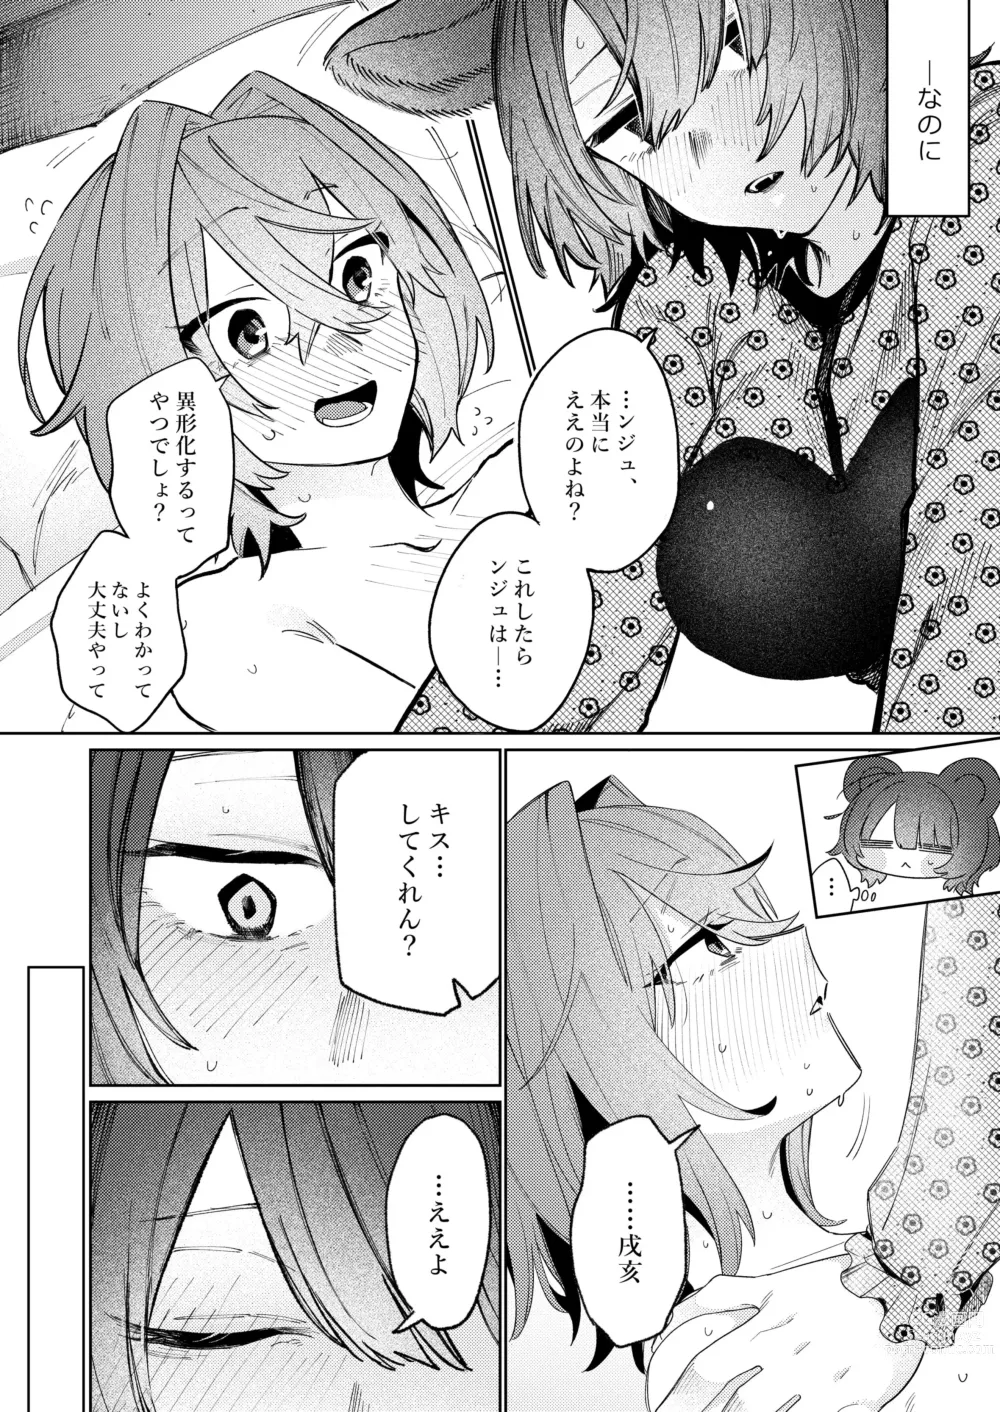 Page 4 of doujinshi Imi Denshin